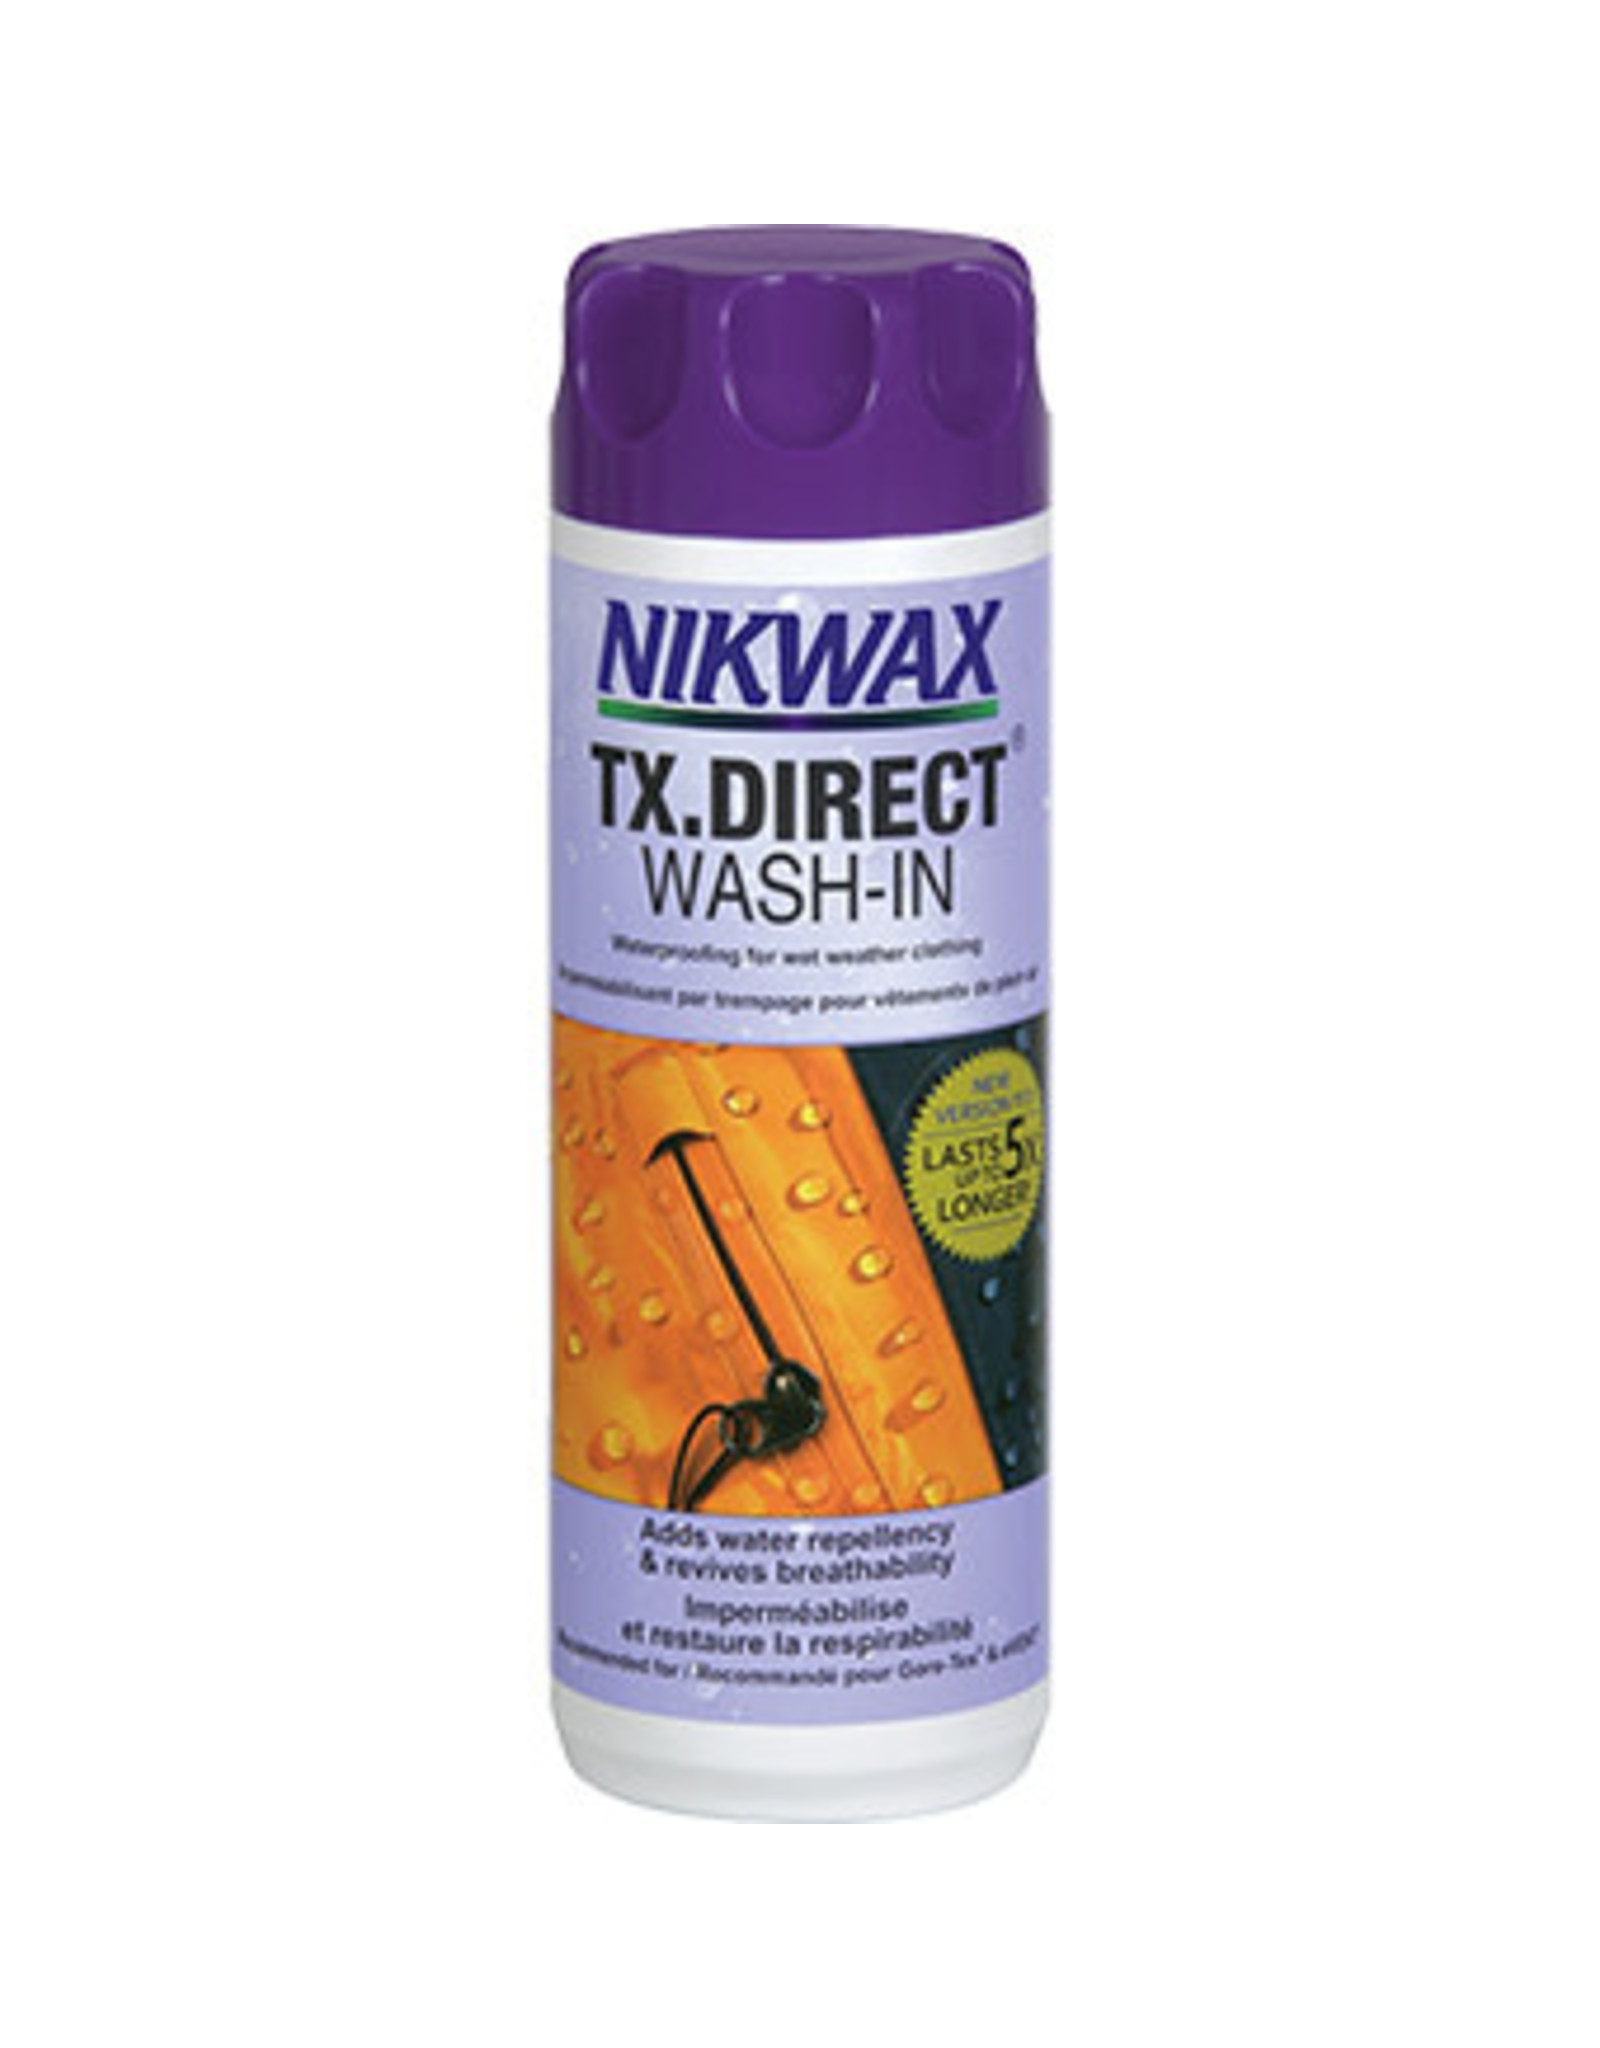 NIKWAX TX-DIRECT WASH-IN 10 FL OZ